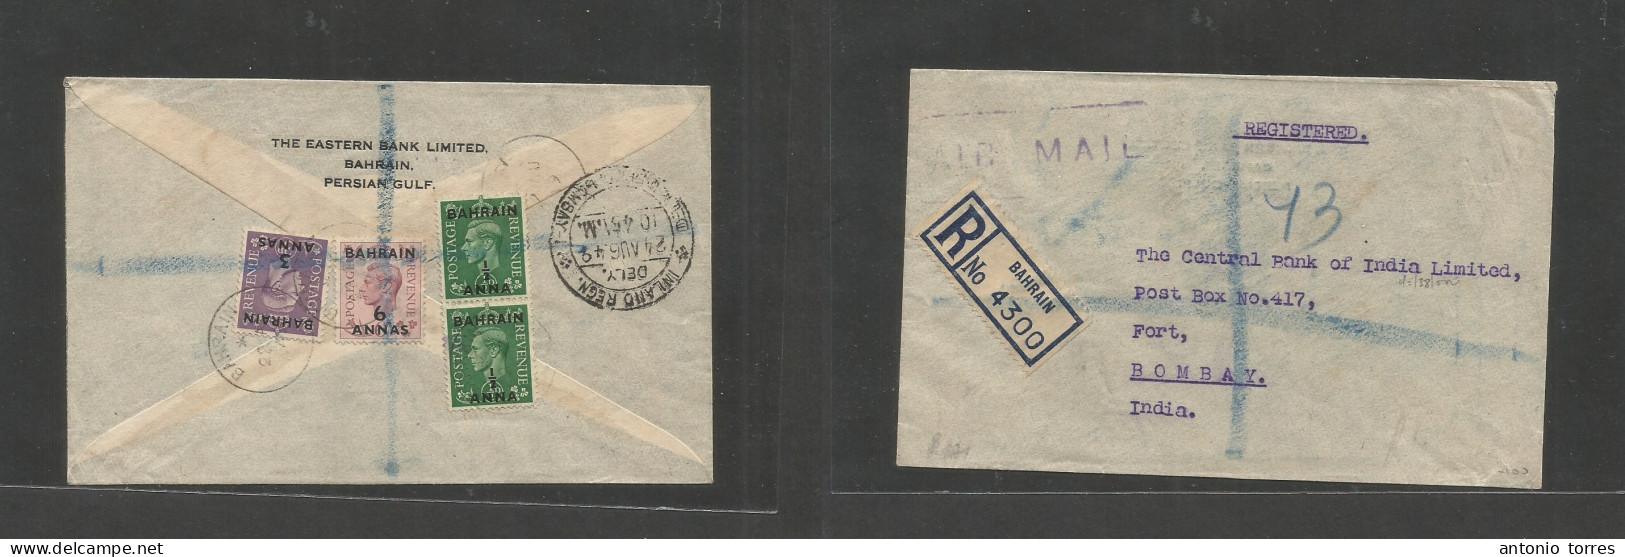 Bahrain. 1948 (22 Aug) GPO - India, Bombay (24 Aug) Registered Reverse Multifkd Env, Ovpt Issue, Tied Cds. Fine. - Bahrain (1965-...)